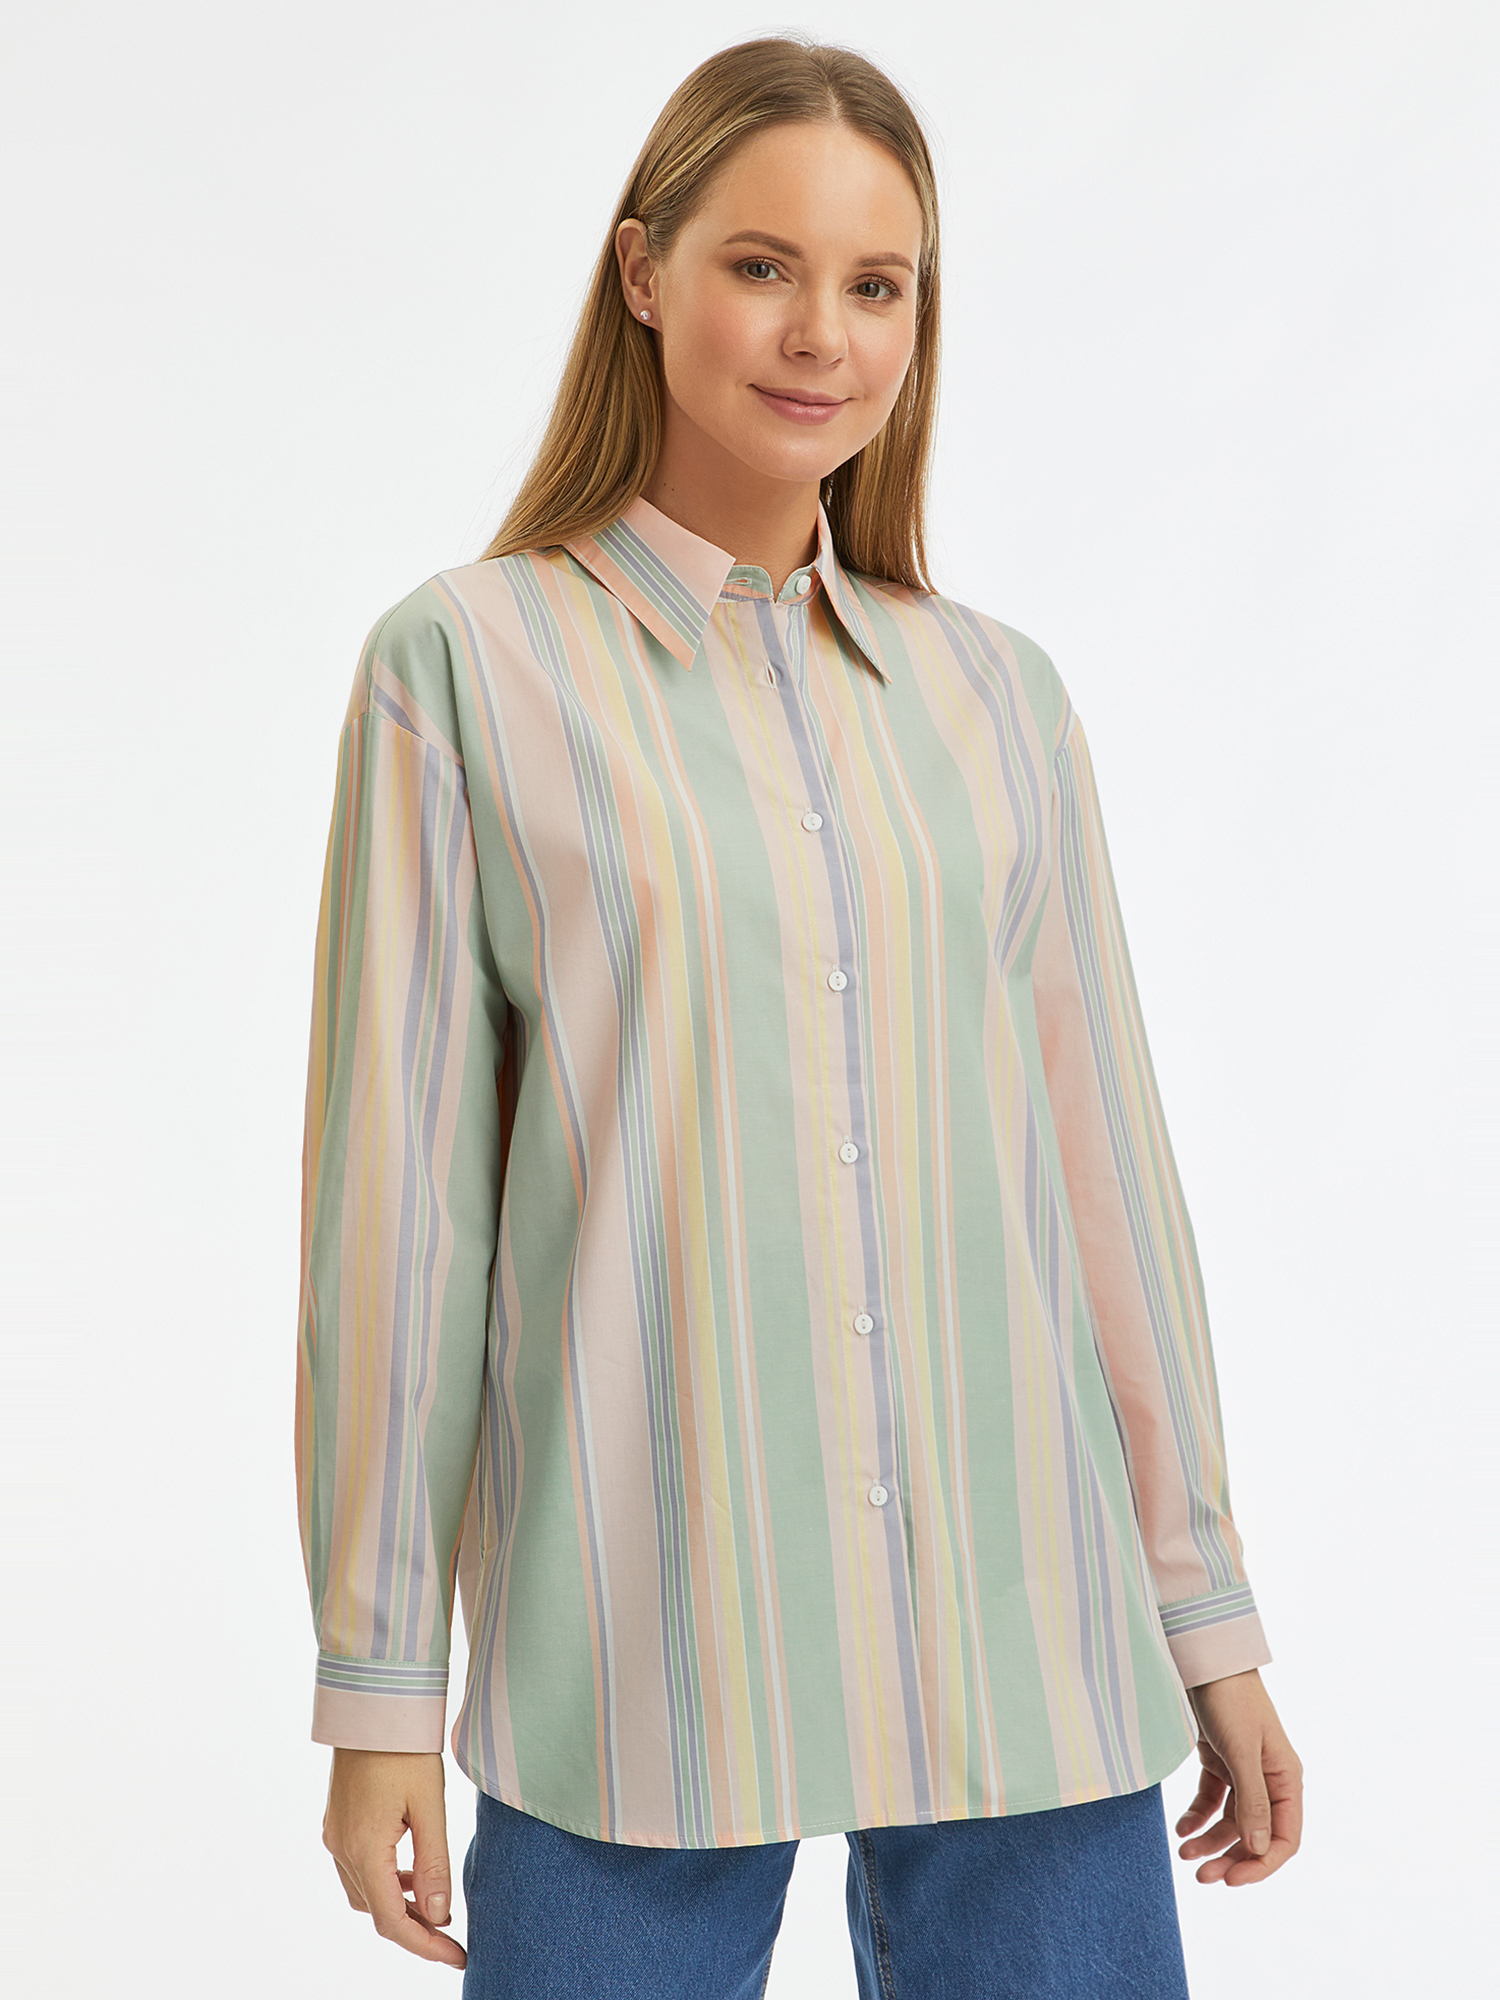 Рубашка женская oodji 13K11041-3 зеленая 40